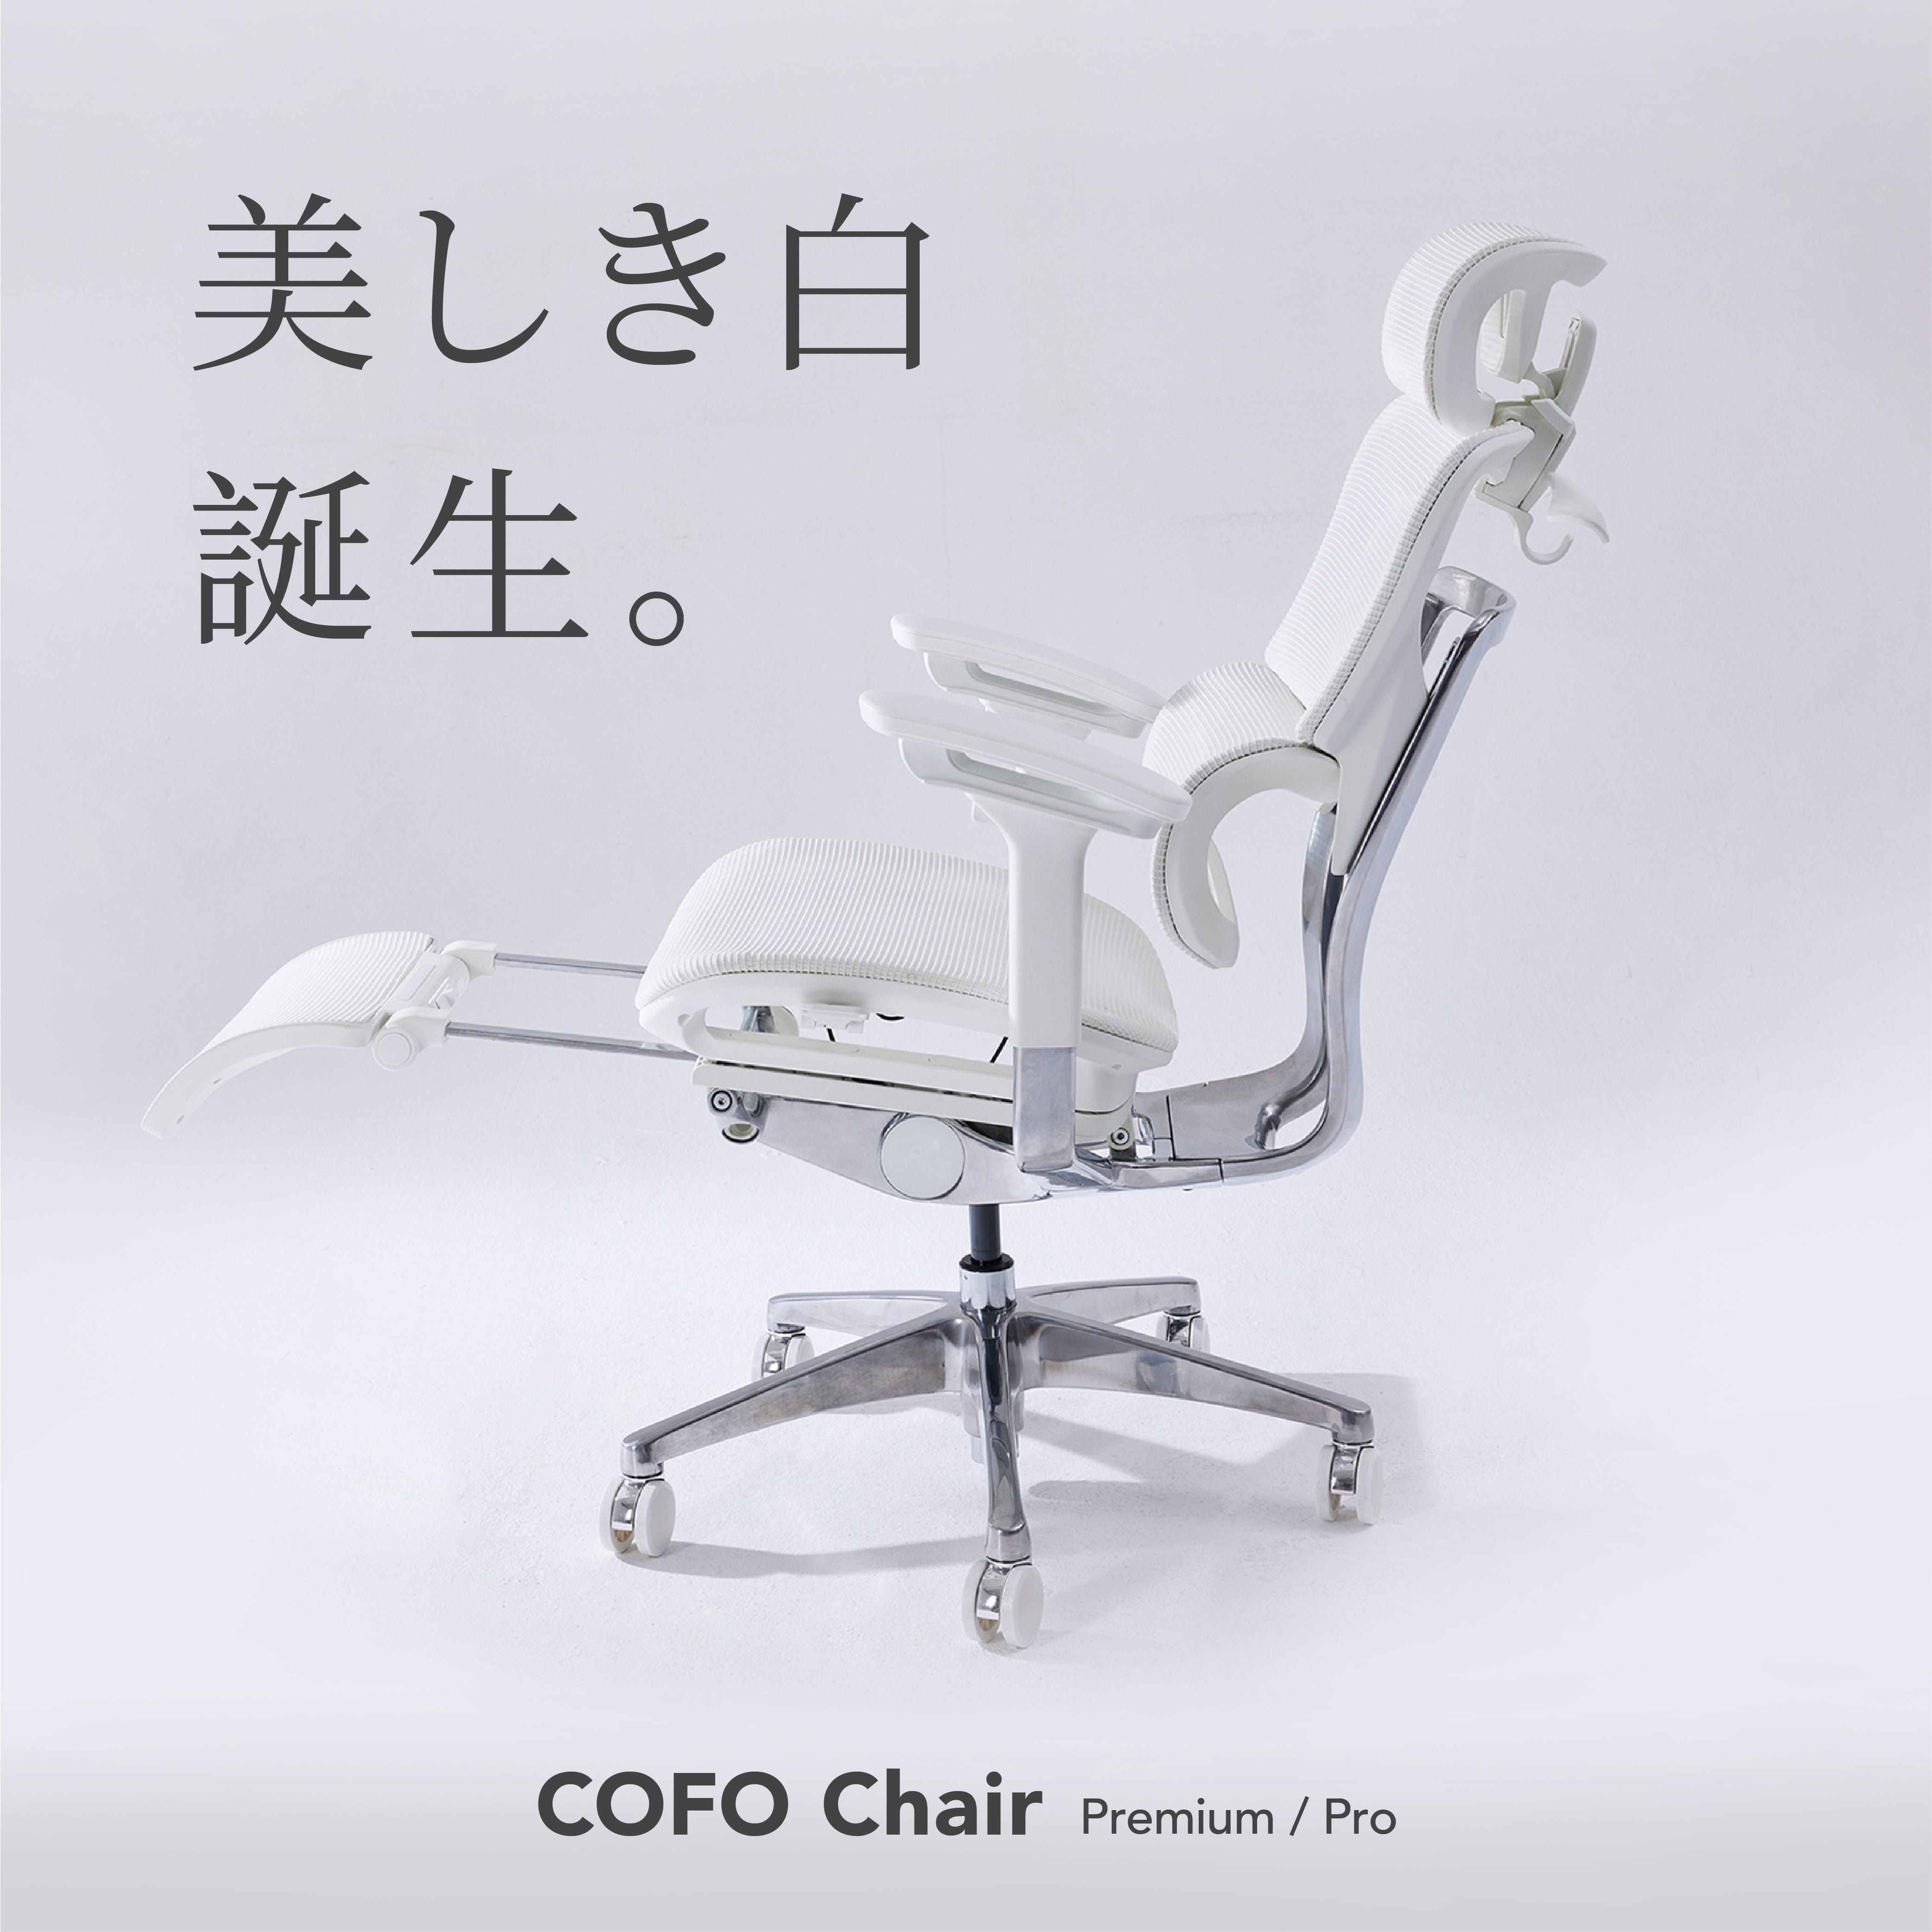 COFO Chairシリーズ】新色ホワイトのワークチェアが登場！ – COFO